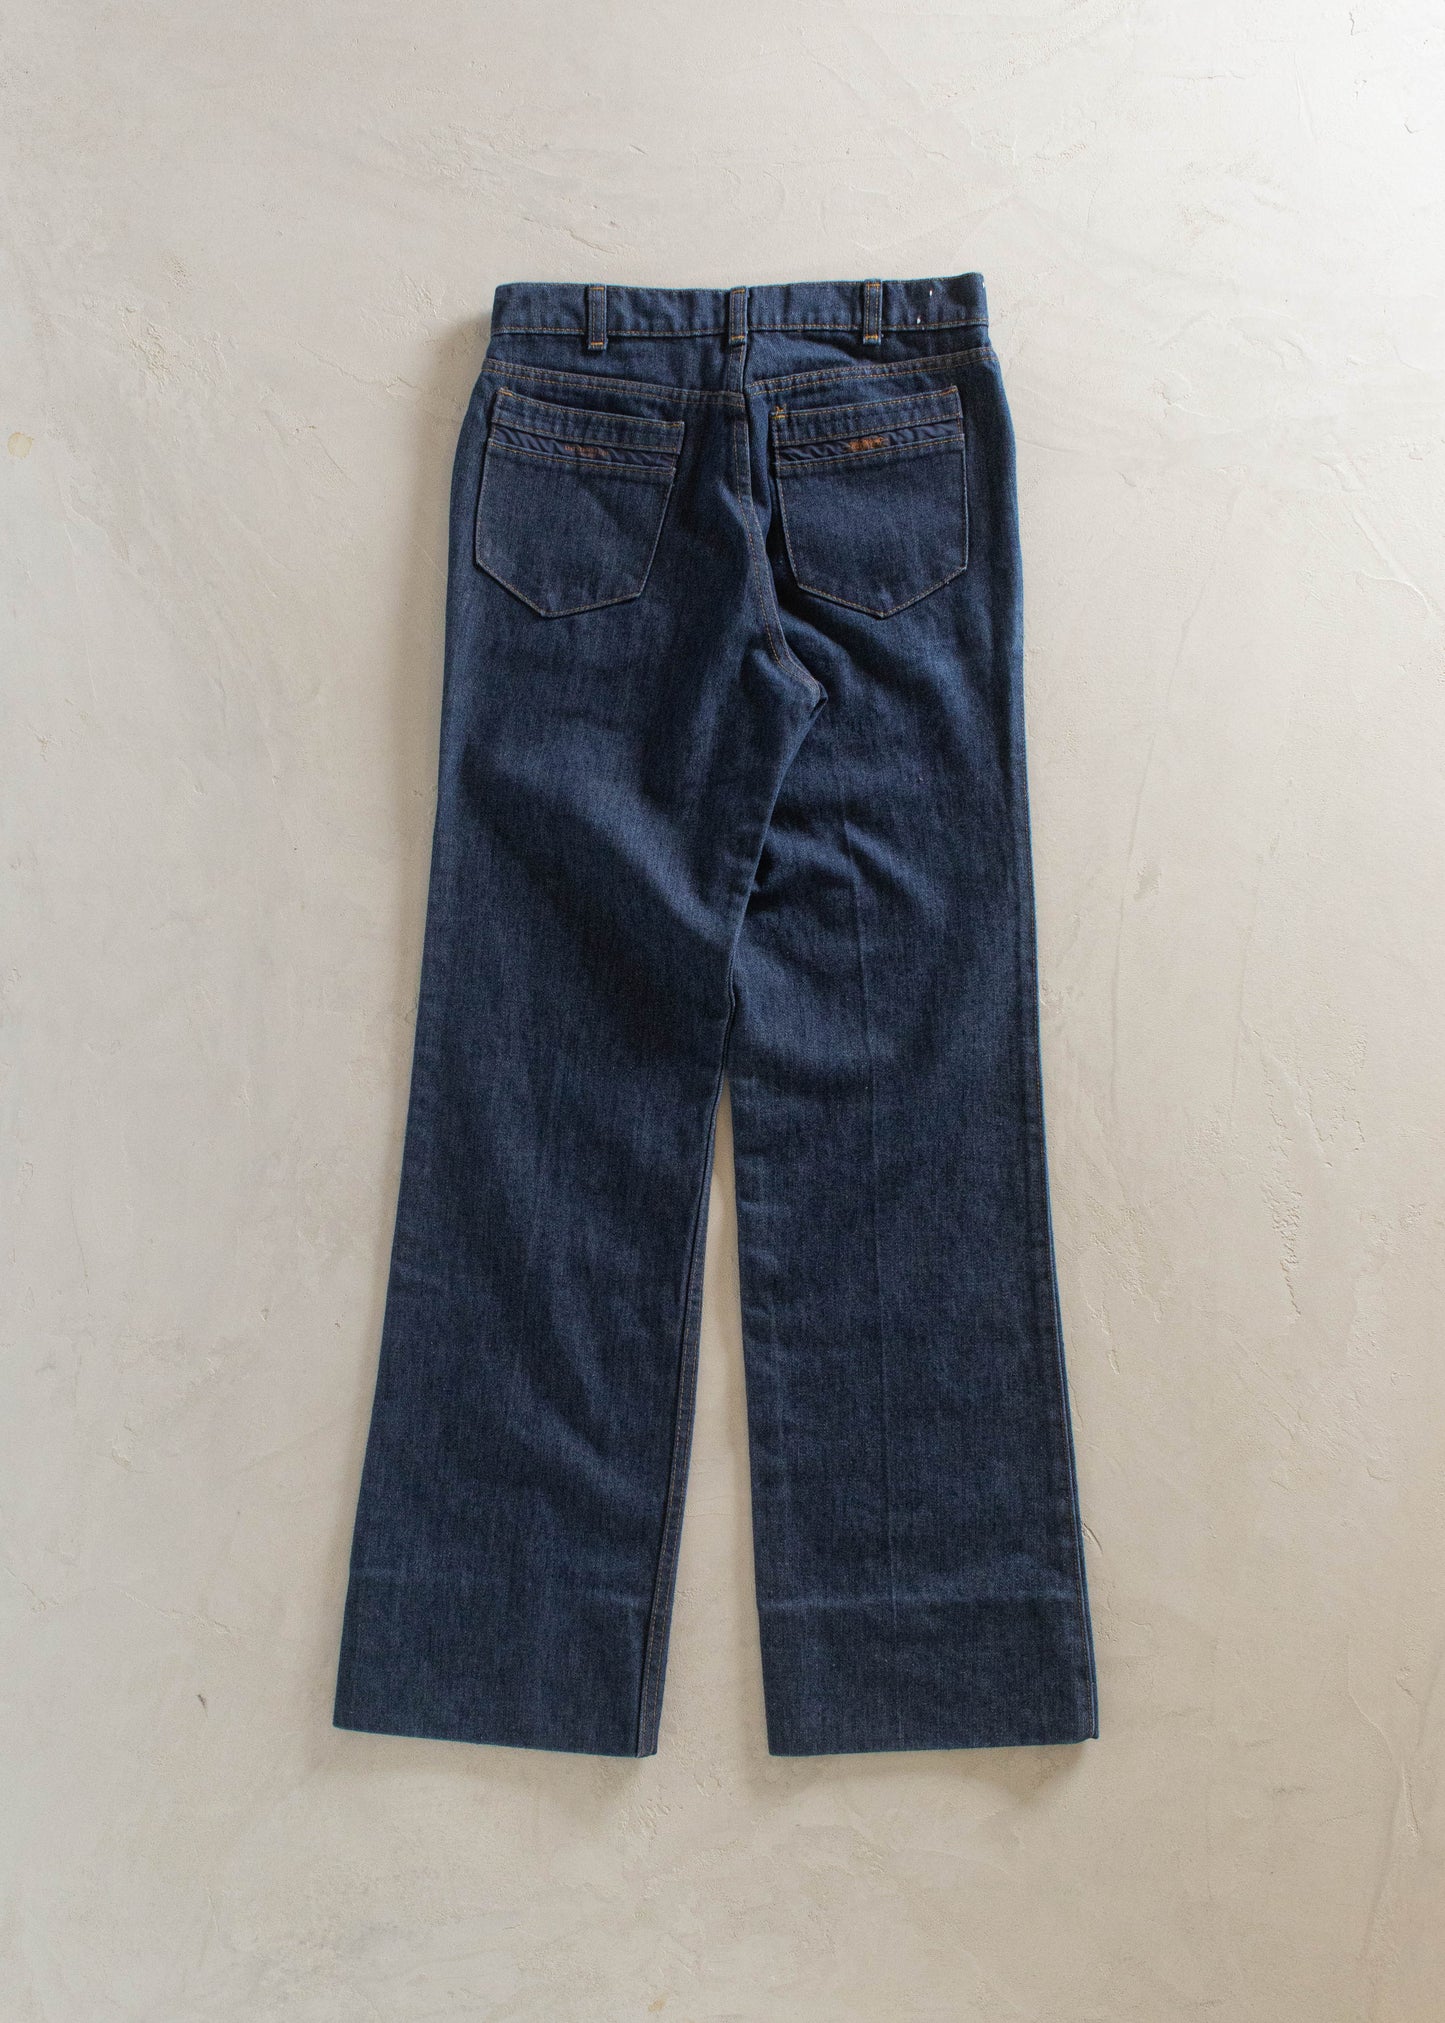 1970s Levi's Darkwash Flare Jeans Size Women's 29 Men's 32